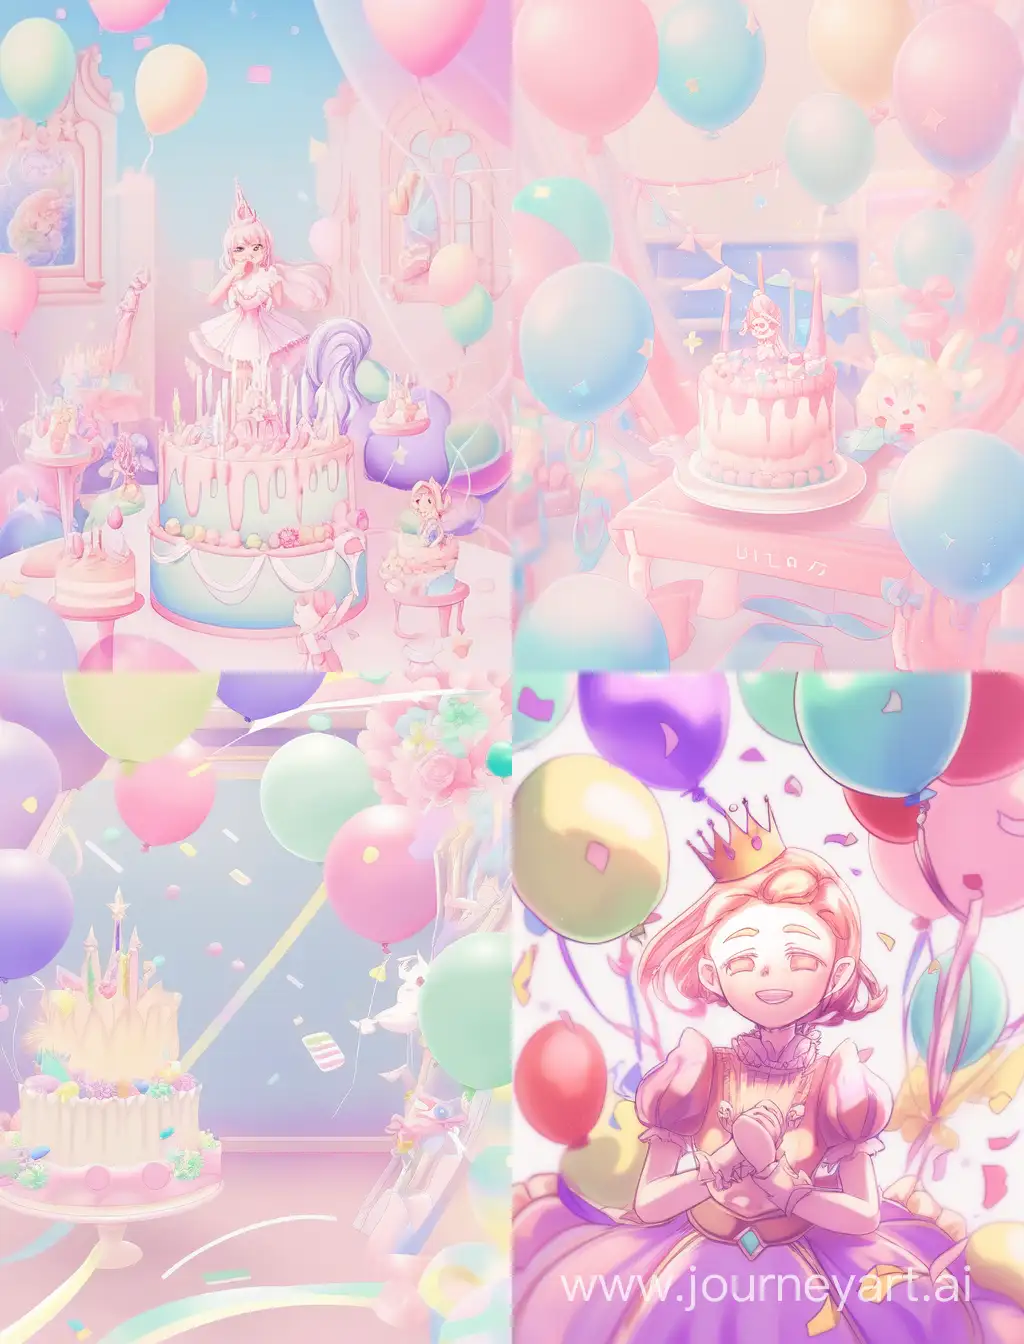 Joyful-Princess-Birthday-Celebration-with-Cake-Balloons-and-Pastel-Colors